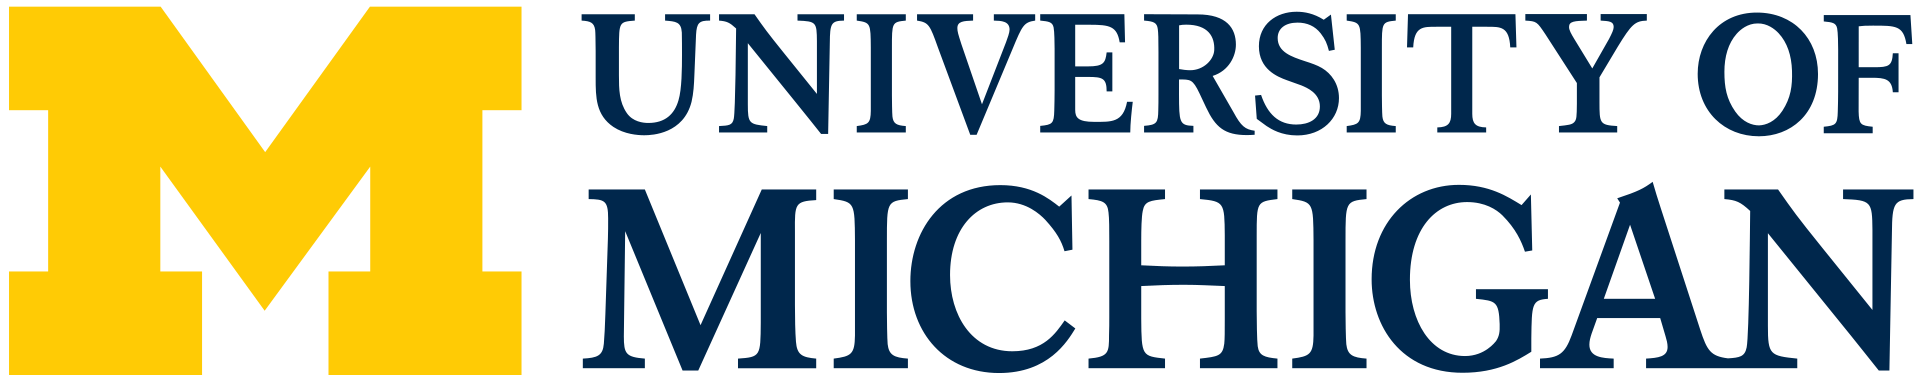 University of Michigan logo, By University of Michigan - http://vpcomm.密西根大学.edu/brand/downloads/um-logo, 公共领域, http://commons.维基.org/w/index.php?curid = 71242380 "